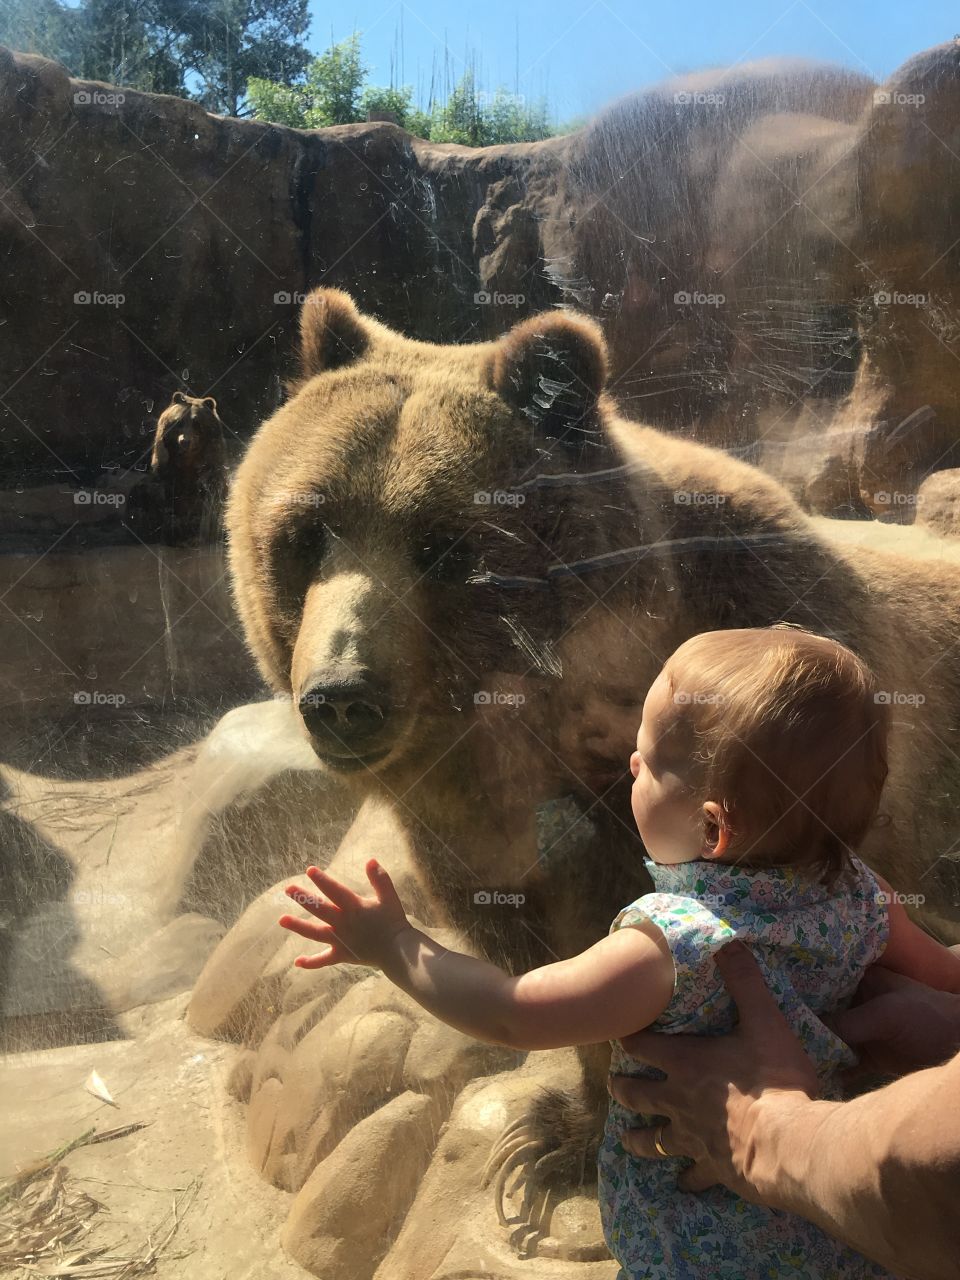 Bear hug anyone?